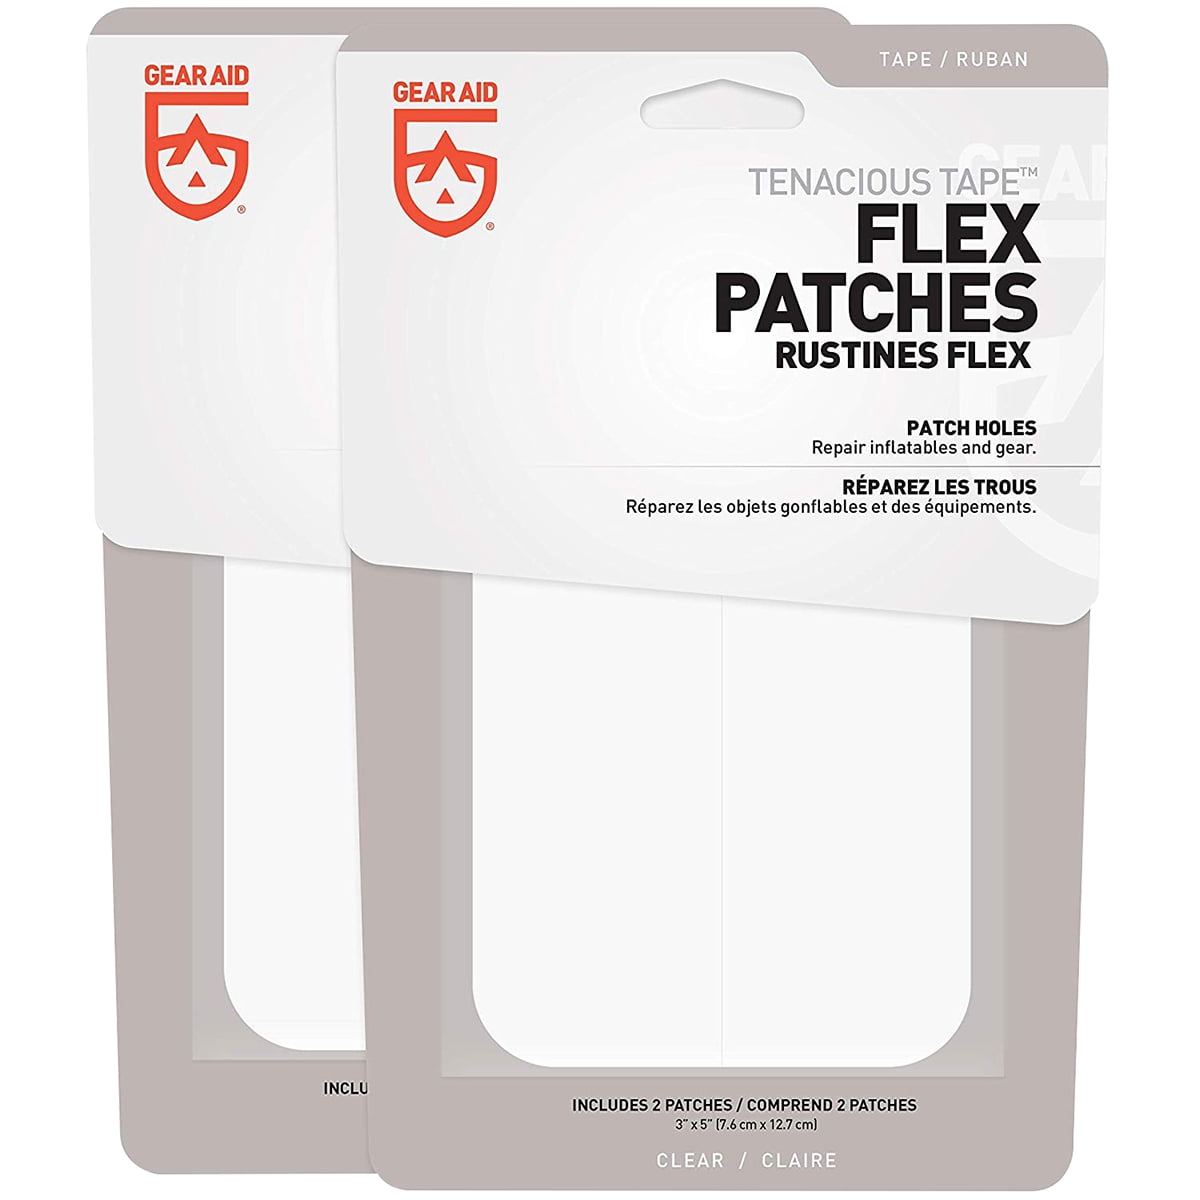 Tenacious Tape Flex Patches